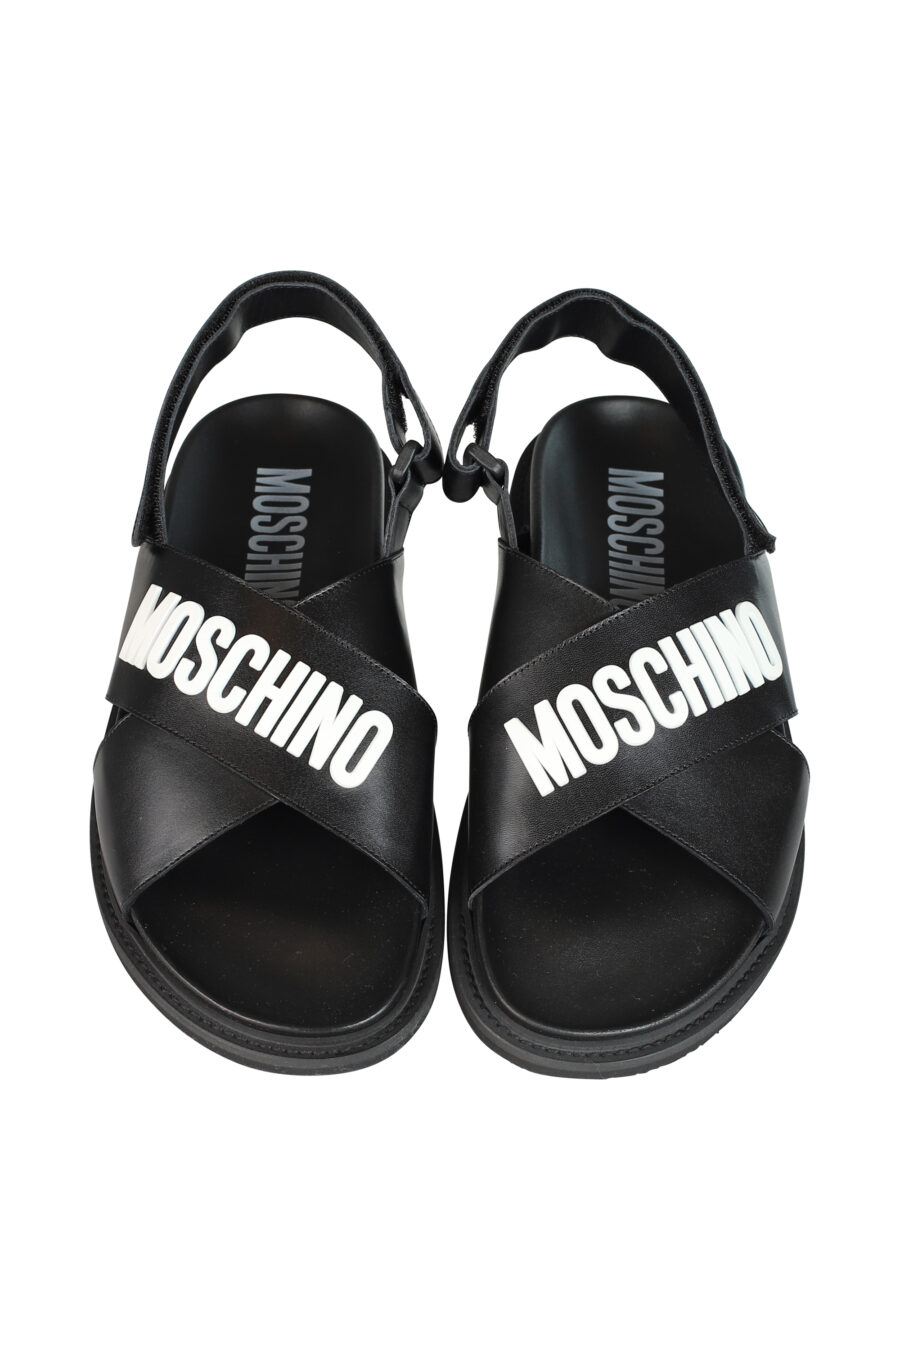 Black crossed sandals with white maxilogo - 8059022514769 5